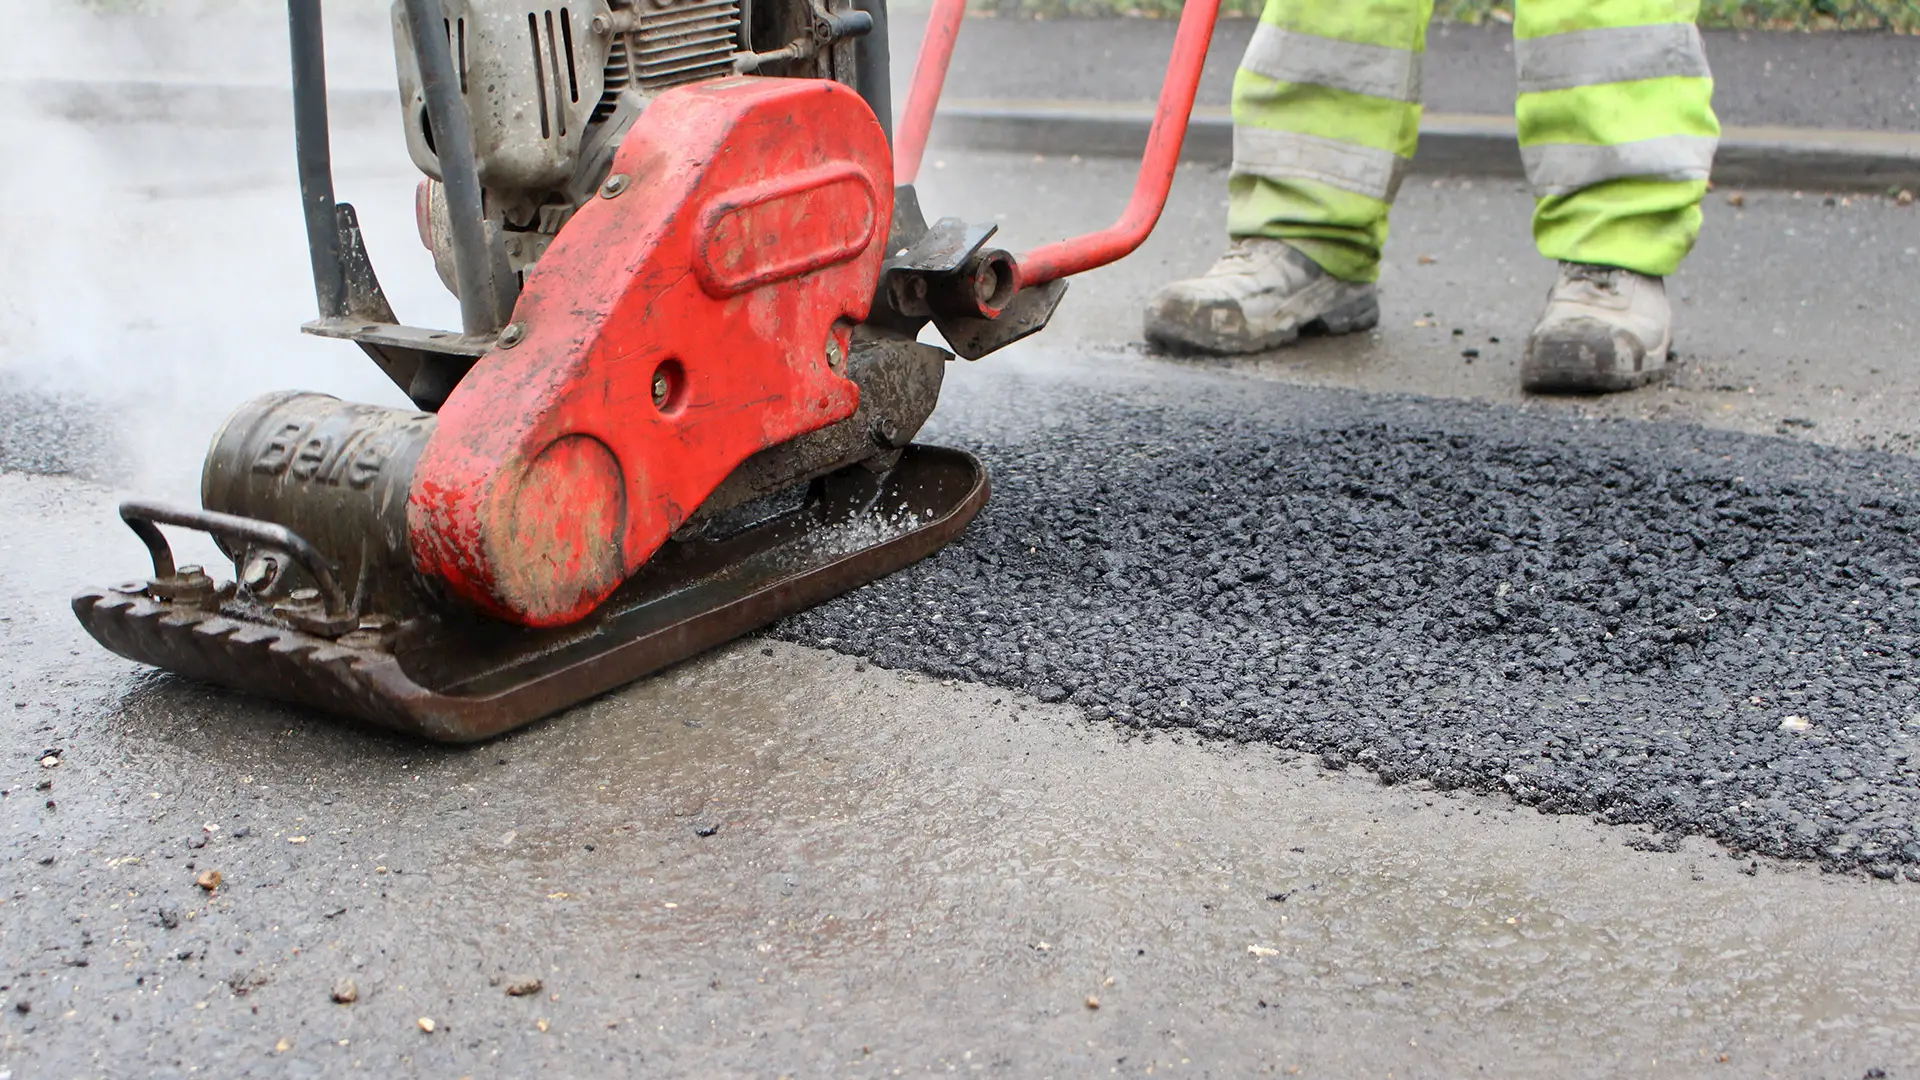 Experienced pothole repair contractors in Erdington